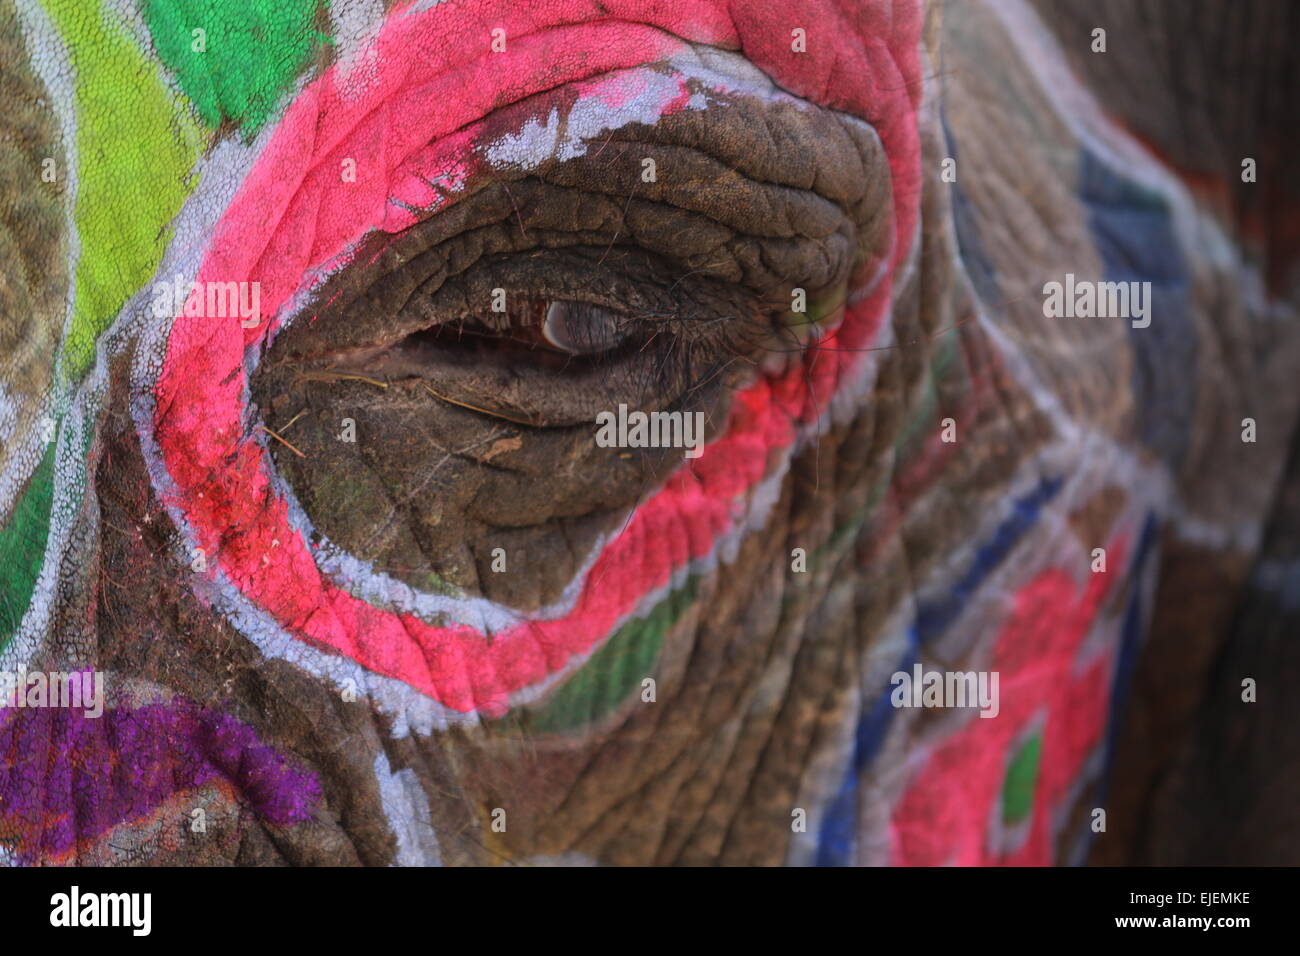 Dipinto elephant close up dell'occhio a Jaipur Foto Stock